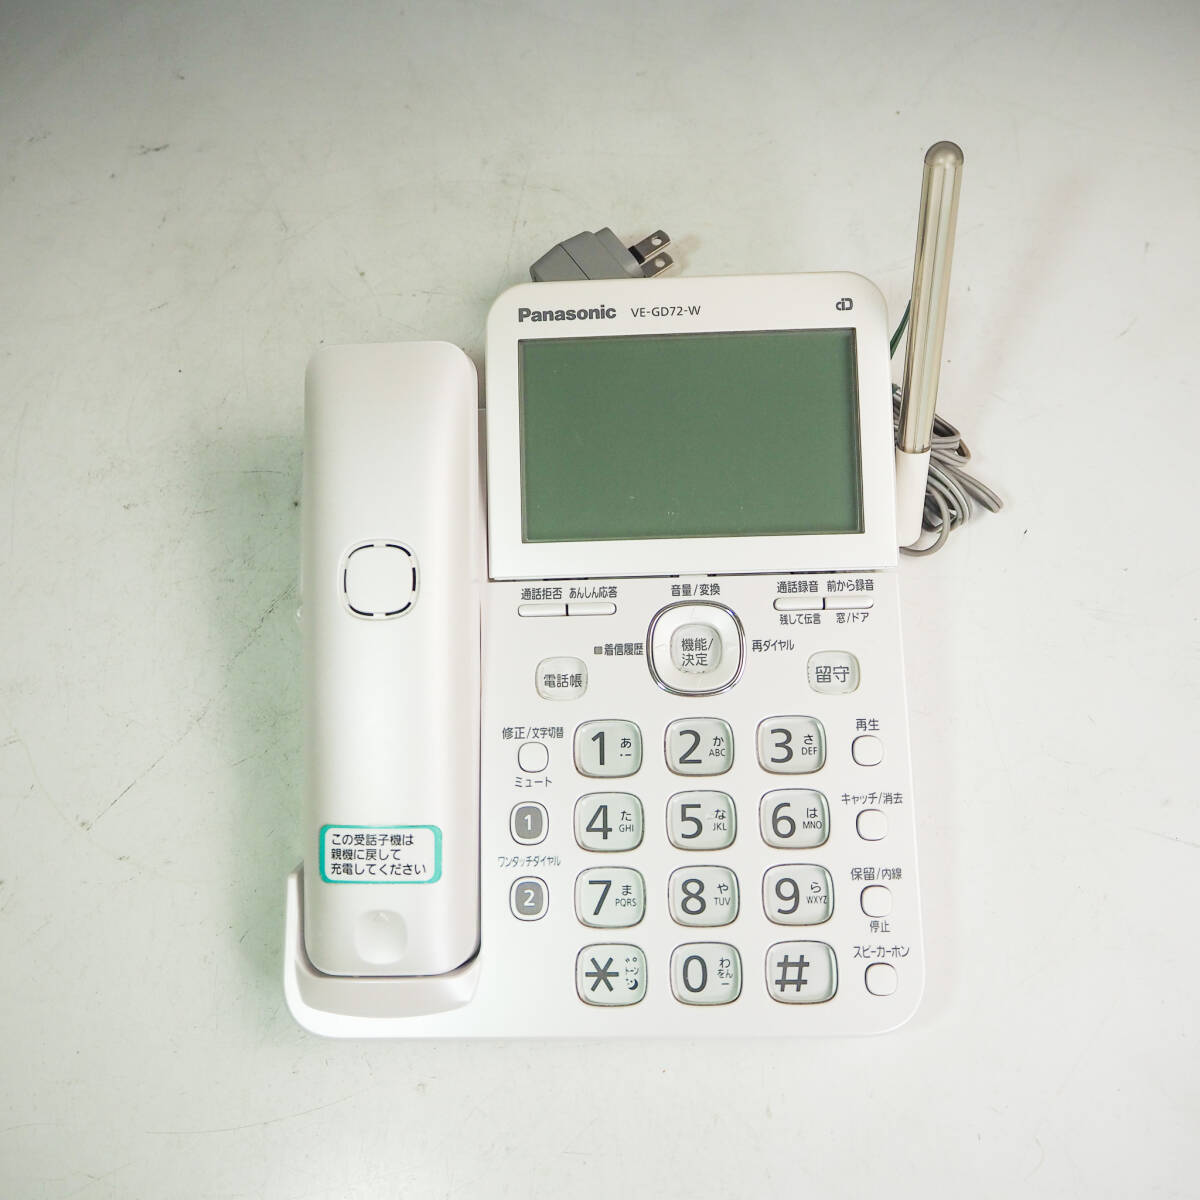 Panasonic パナソニック RU・RU・RU ルルル デジタルコードレス電話機 親機 VE-GD72D-W 子機 KX-FKD506-W1 セット K5090